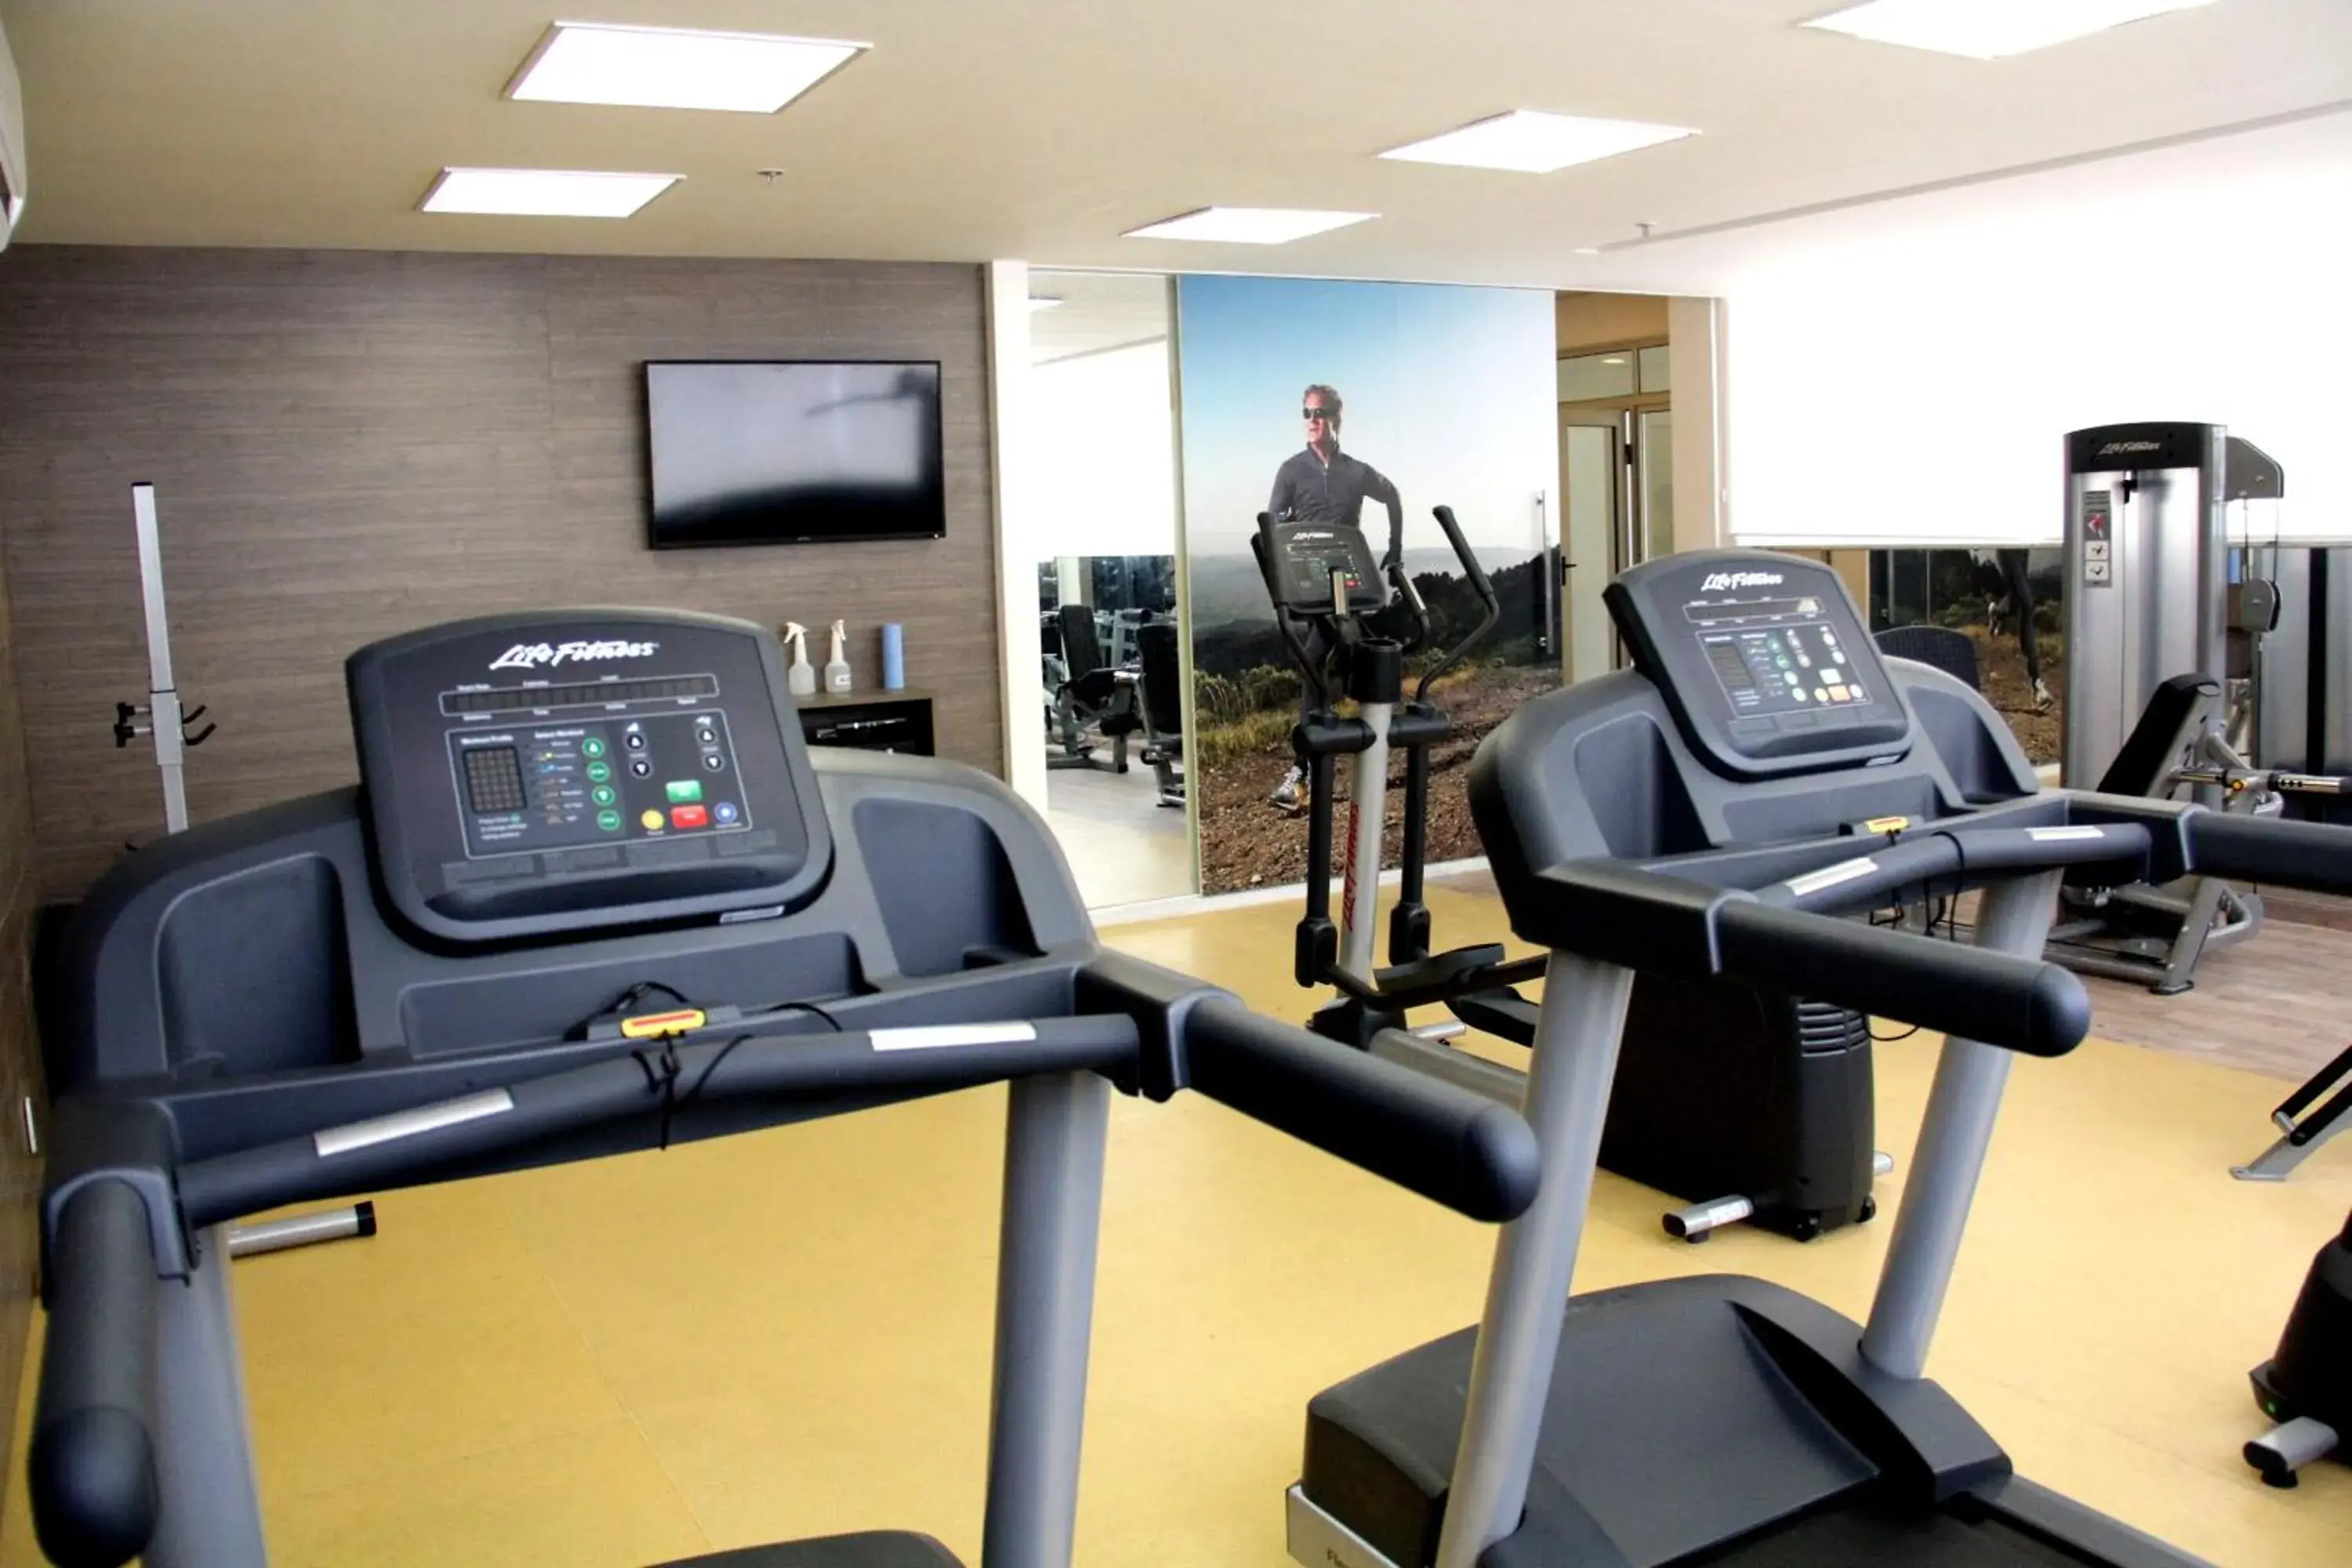 Fitness centre/facilities, Fitness Center/Facilities in Mercure Belo Horizonte Savassi